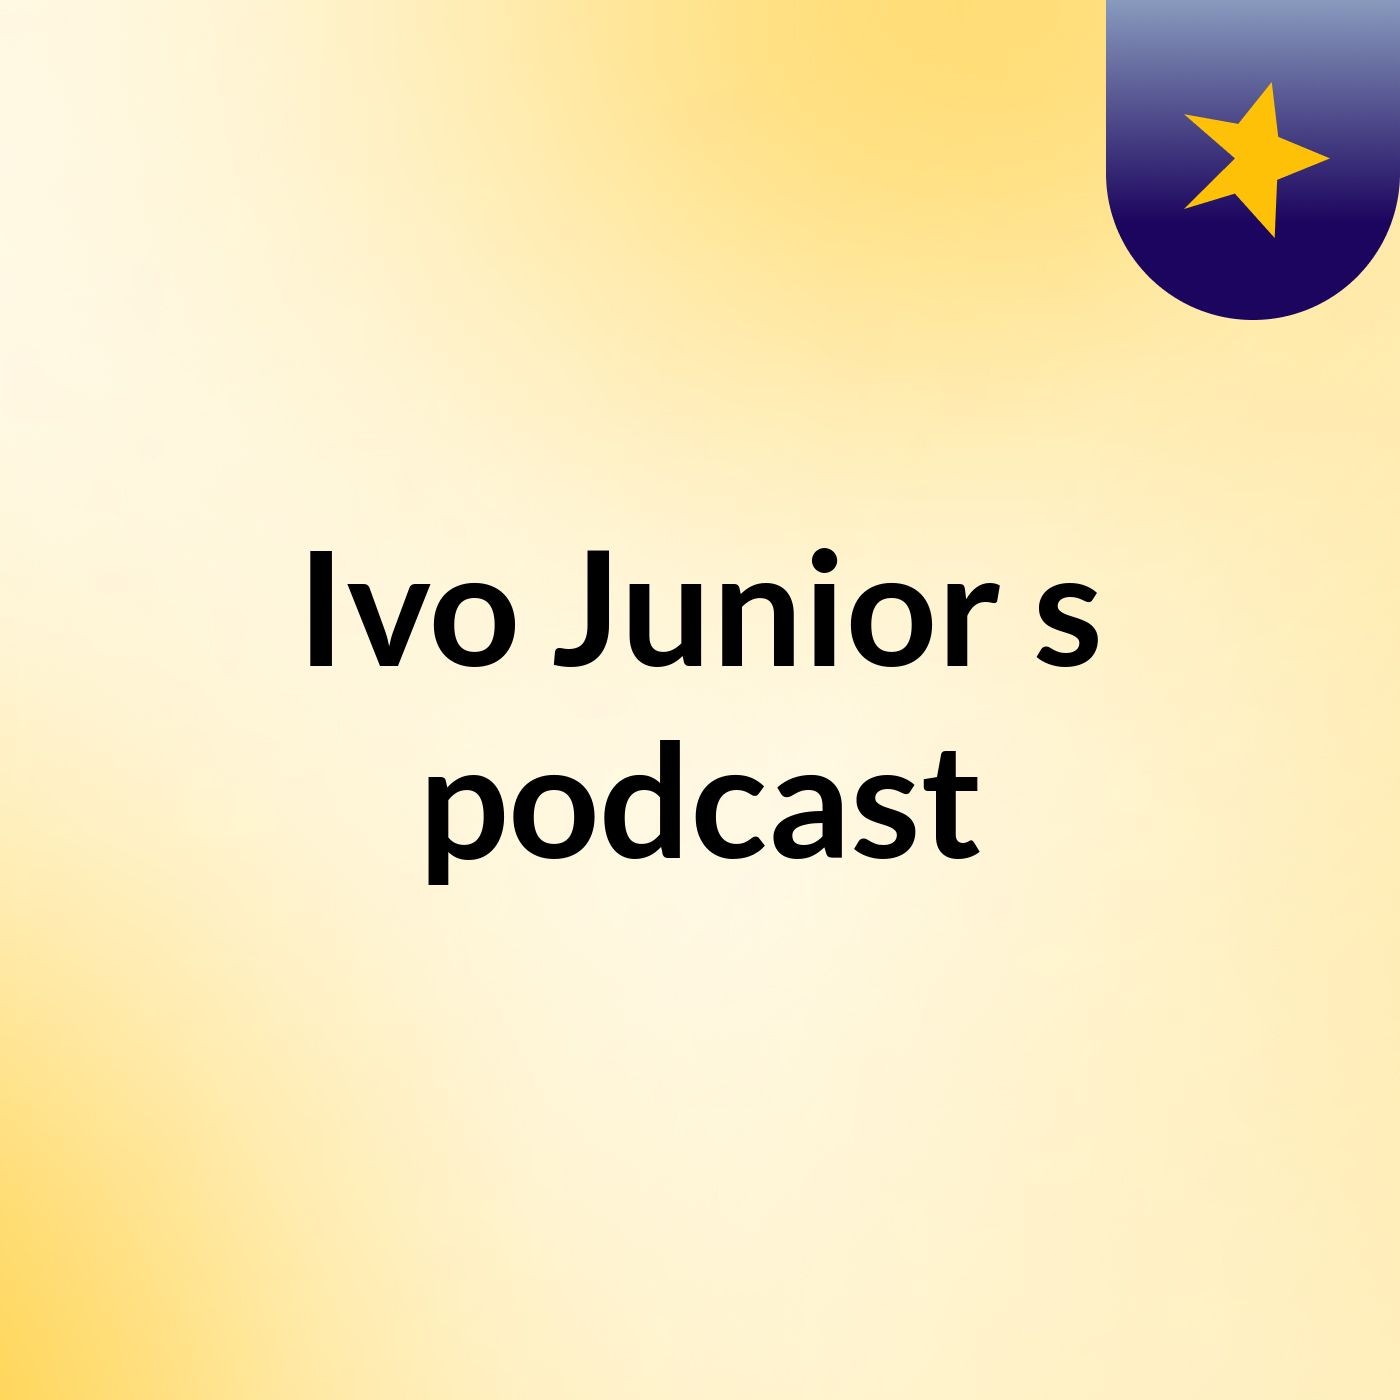 Ivo Junior's podcast